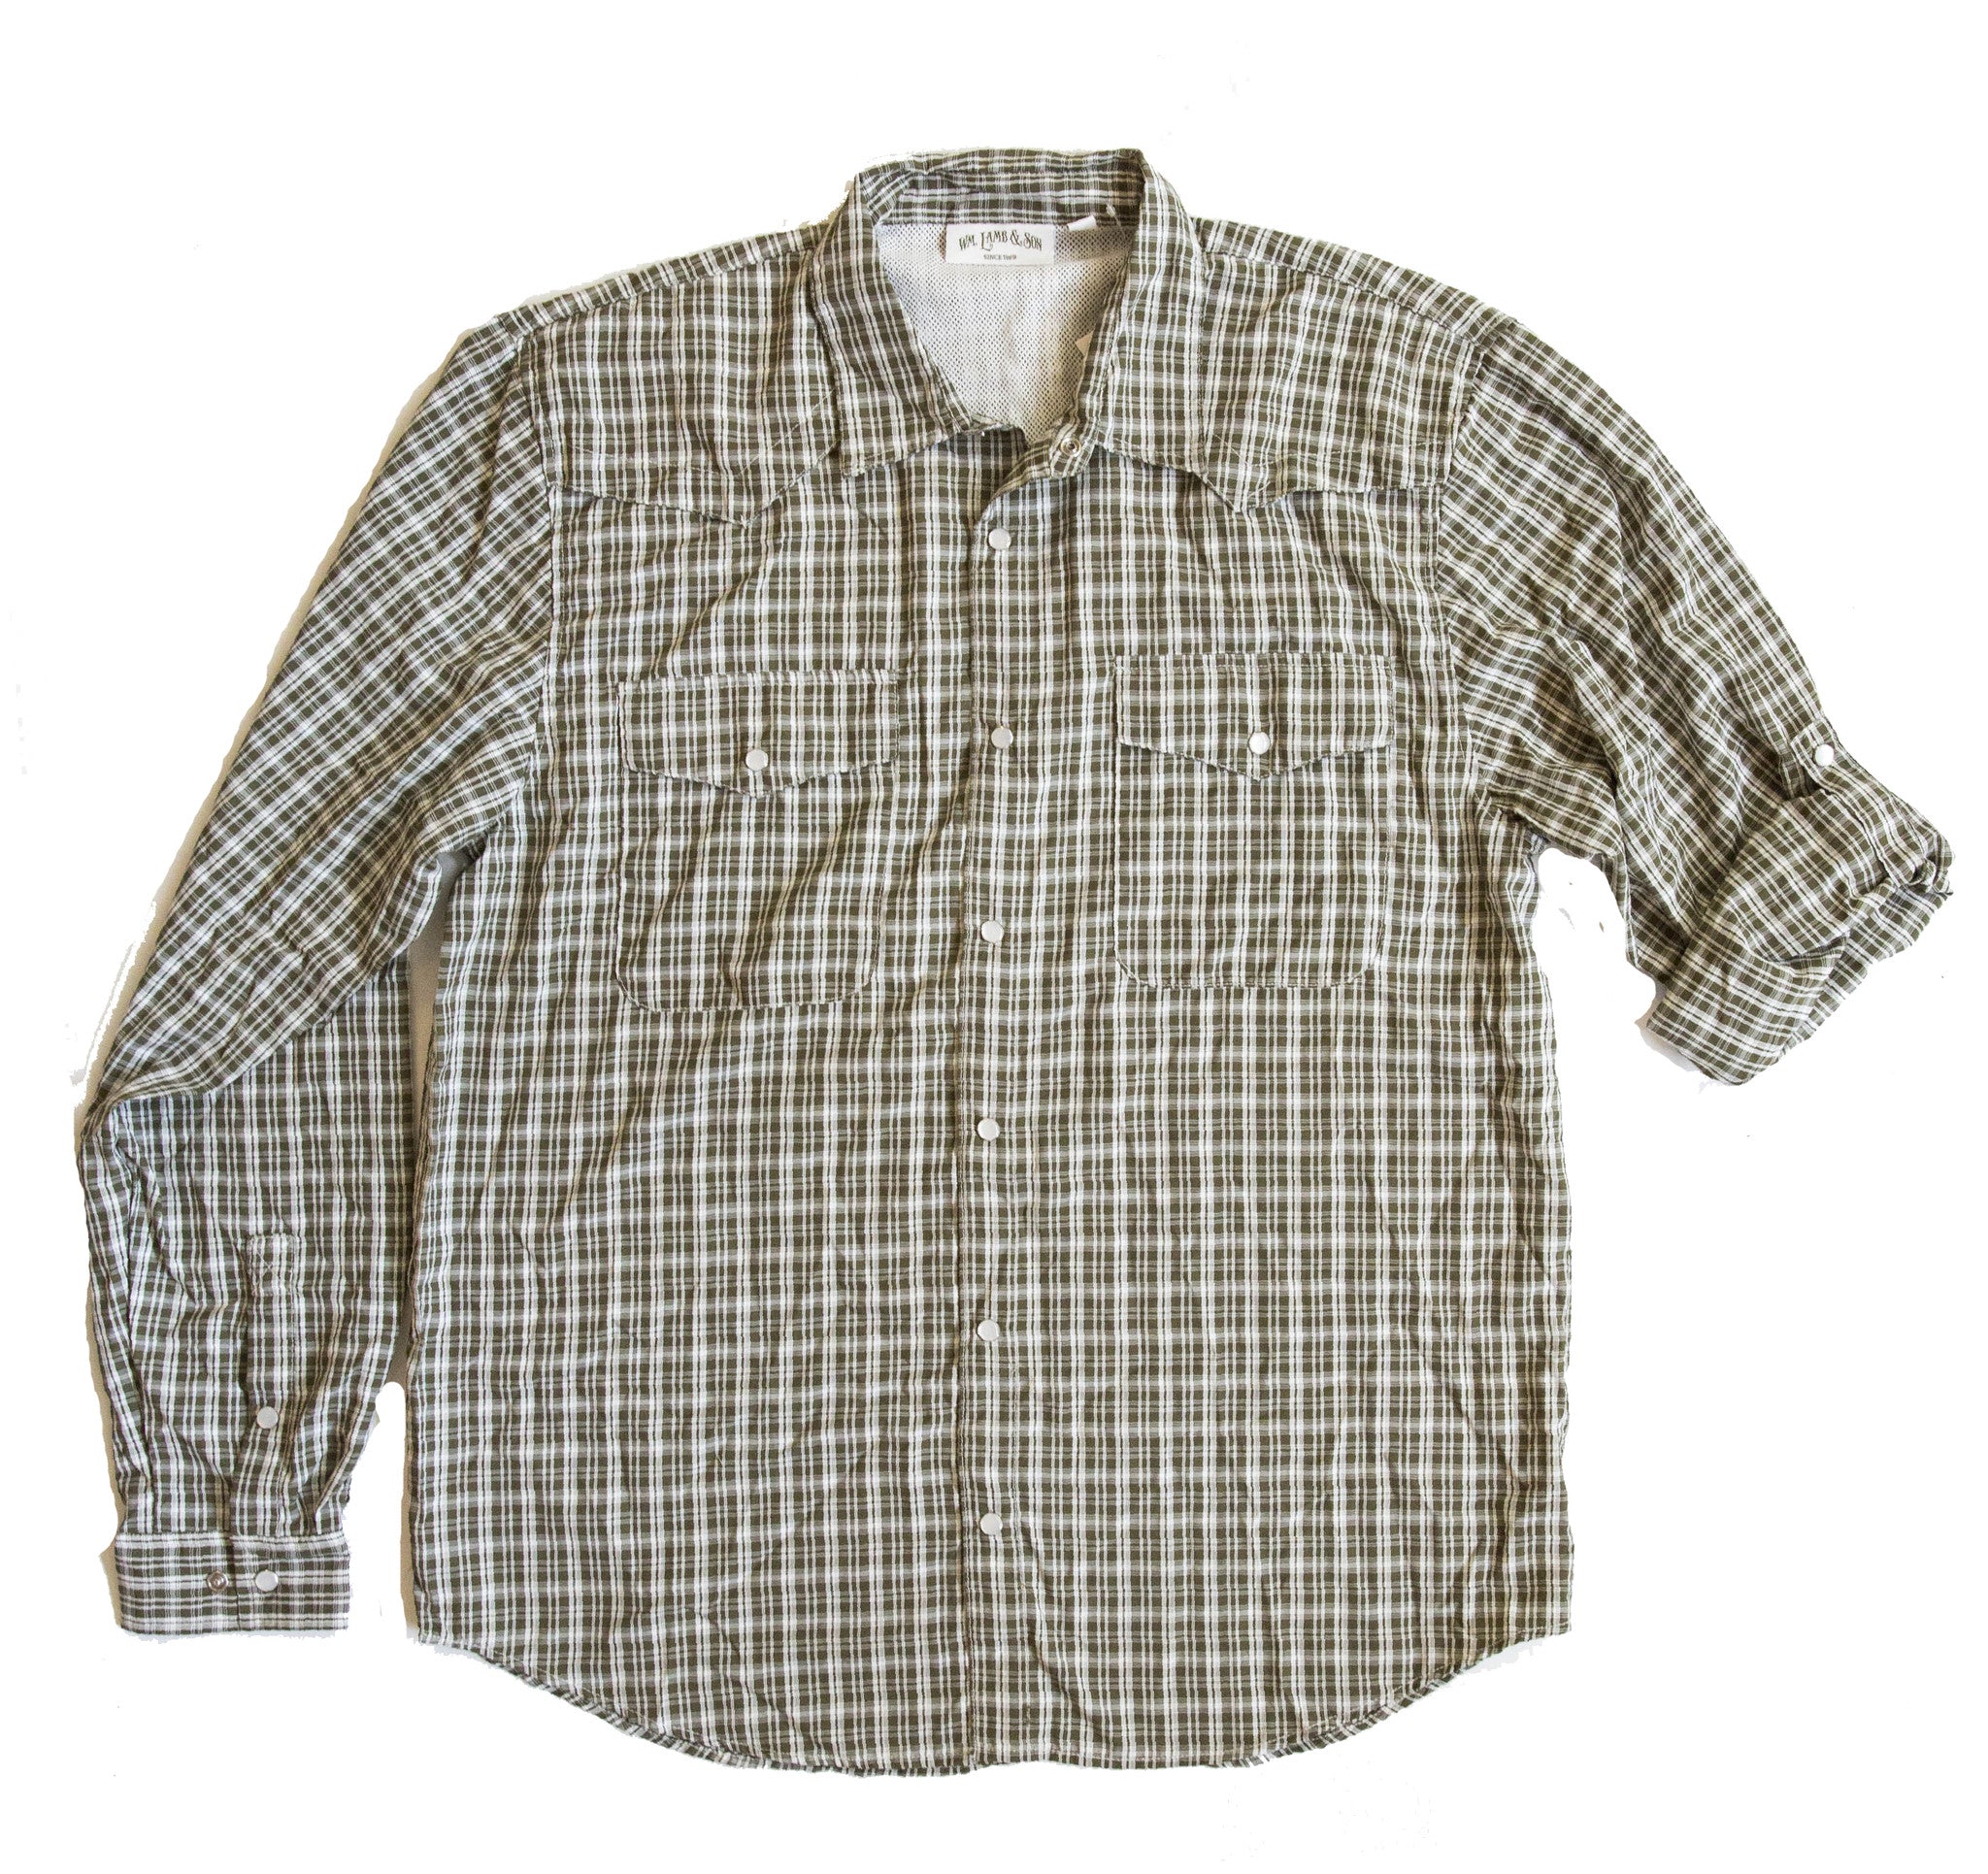 Cache Creek Fishing Shirt - Spruce Plaid Long Sleeve – Wm Lamb & Son